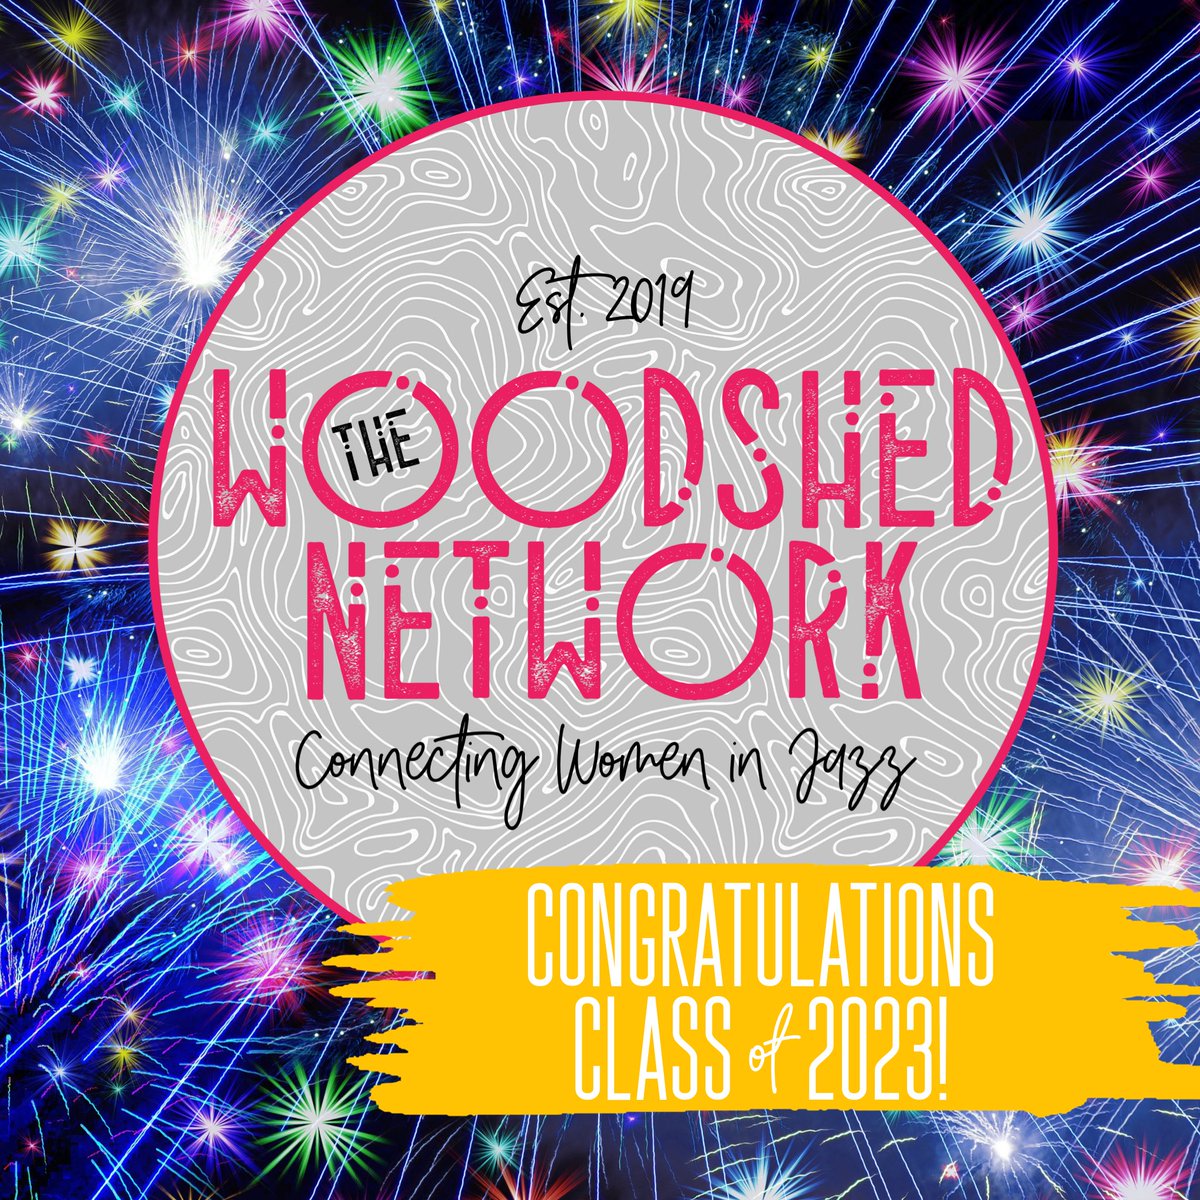 Congratulations Class of 2023! #womeninjazz #womeninmusic